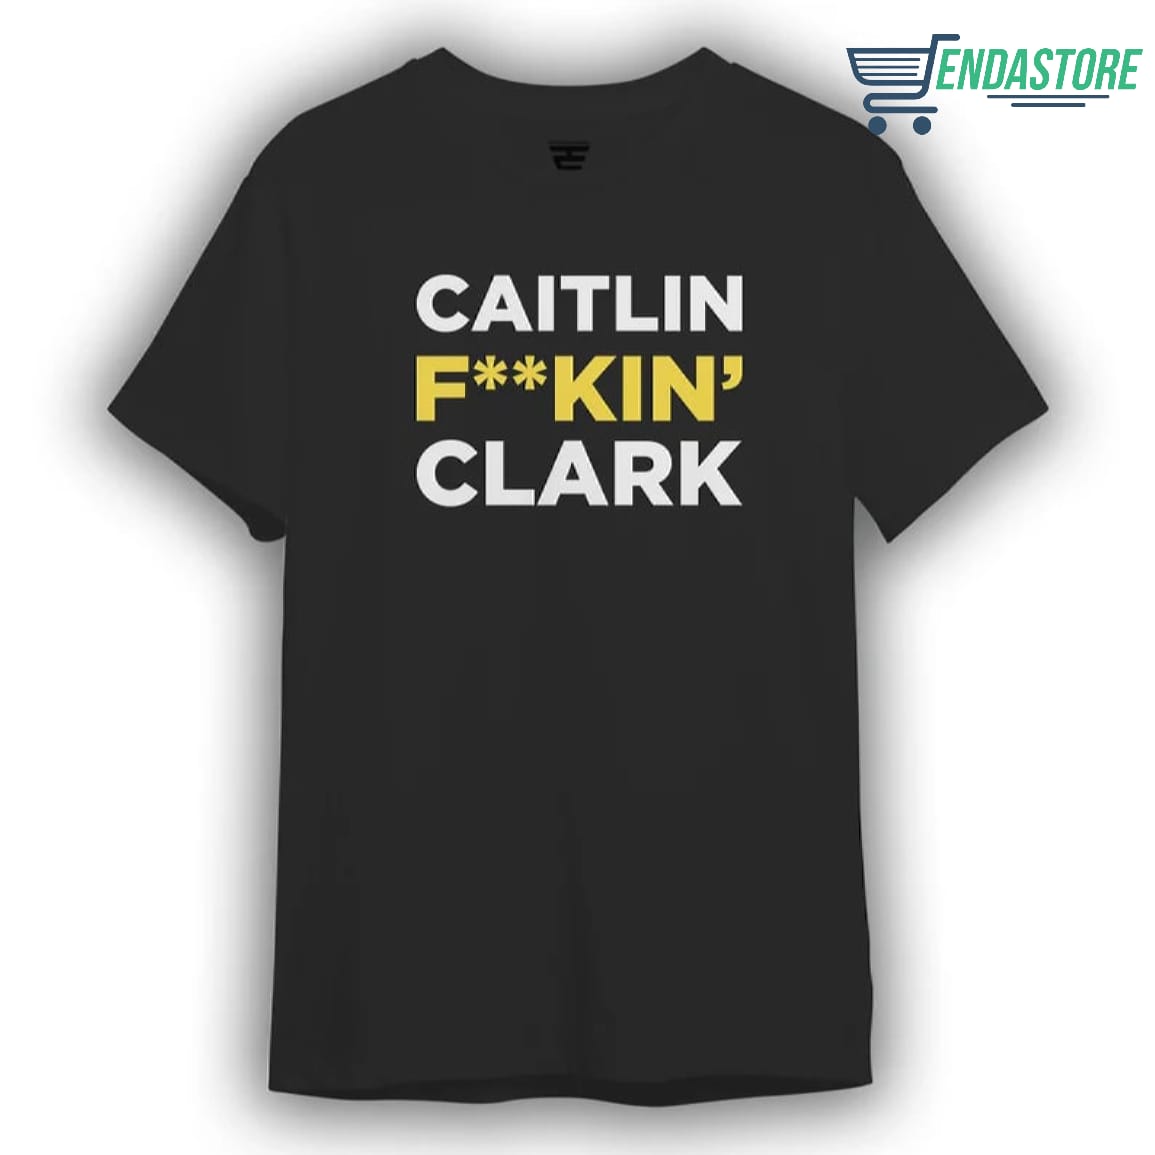 Caitlin Fuckin Clark Shirt - Endastore.com